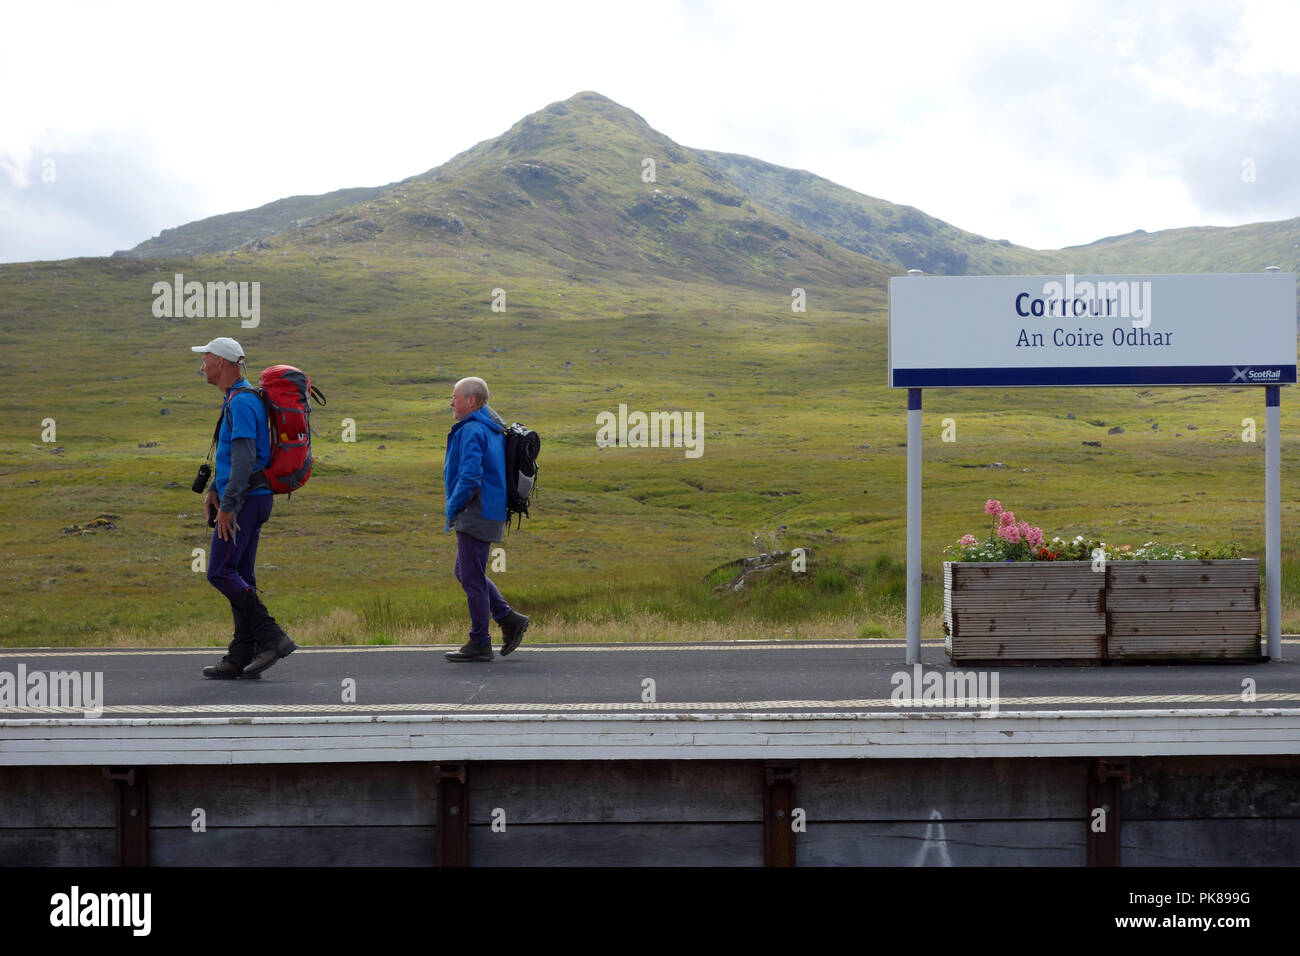 Two Men Walking at Corrour (An Coire Odhar) Train Station and the Scottish Mountain Corbett Leum Uilleim in the Scottish Highlands, Scotland, UK. Stock Photo